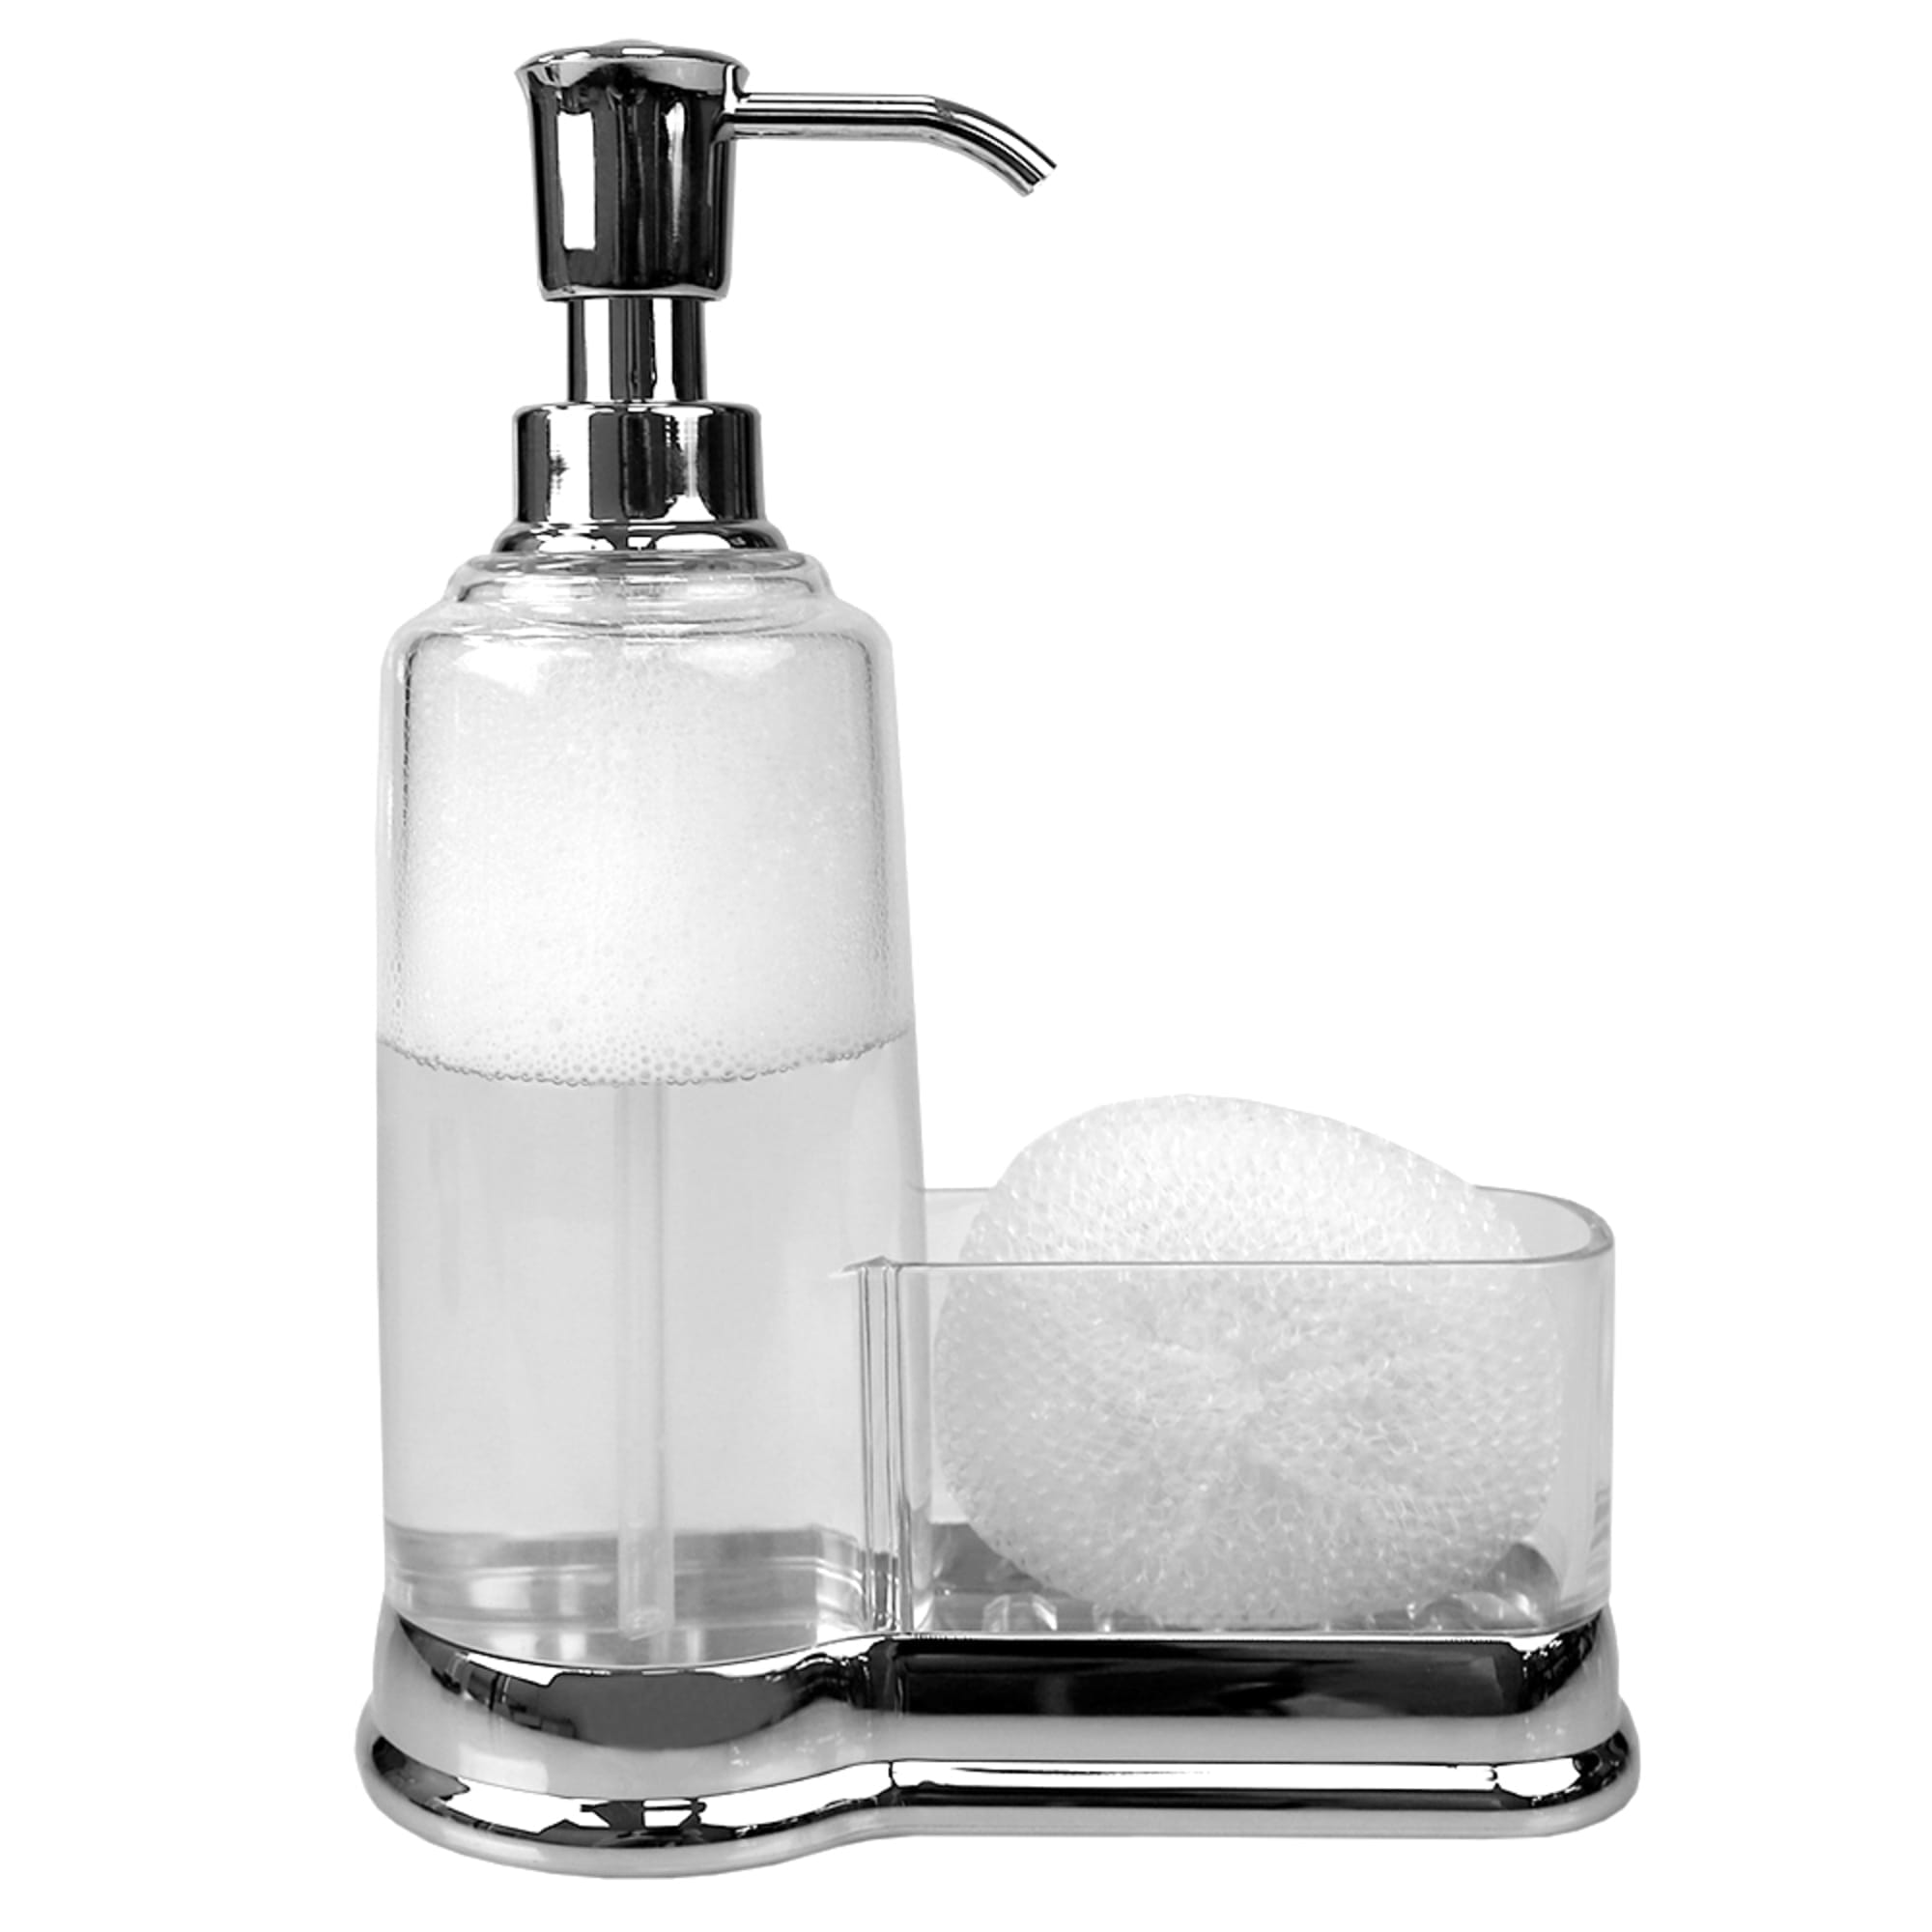 Home Basics Plastic Soap Dispenser with Sponge Compartment, Chrome $6.00 EACH, CASE PACK OF 12